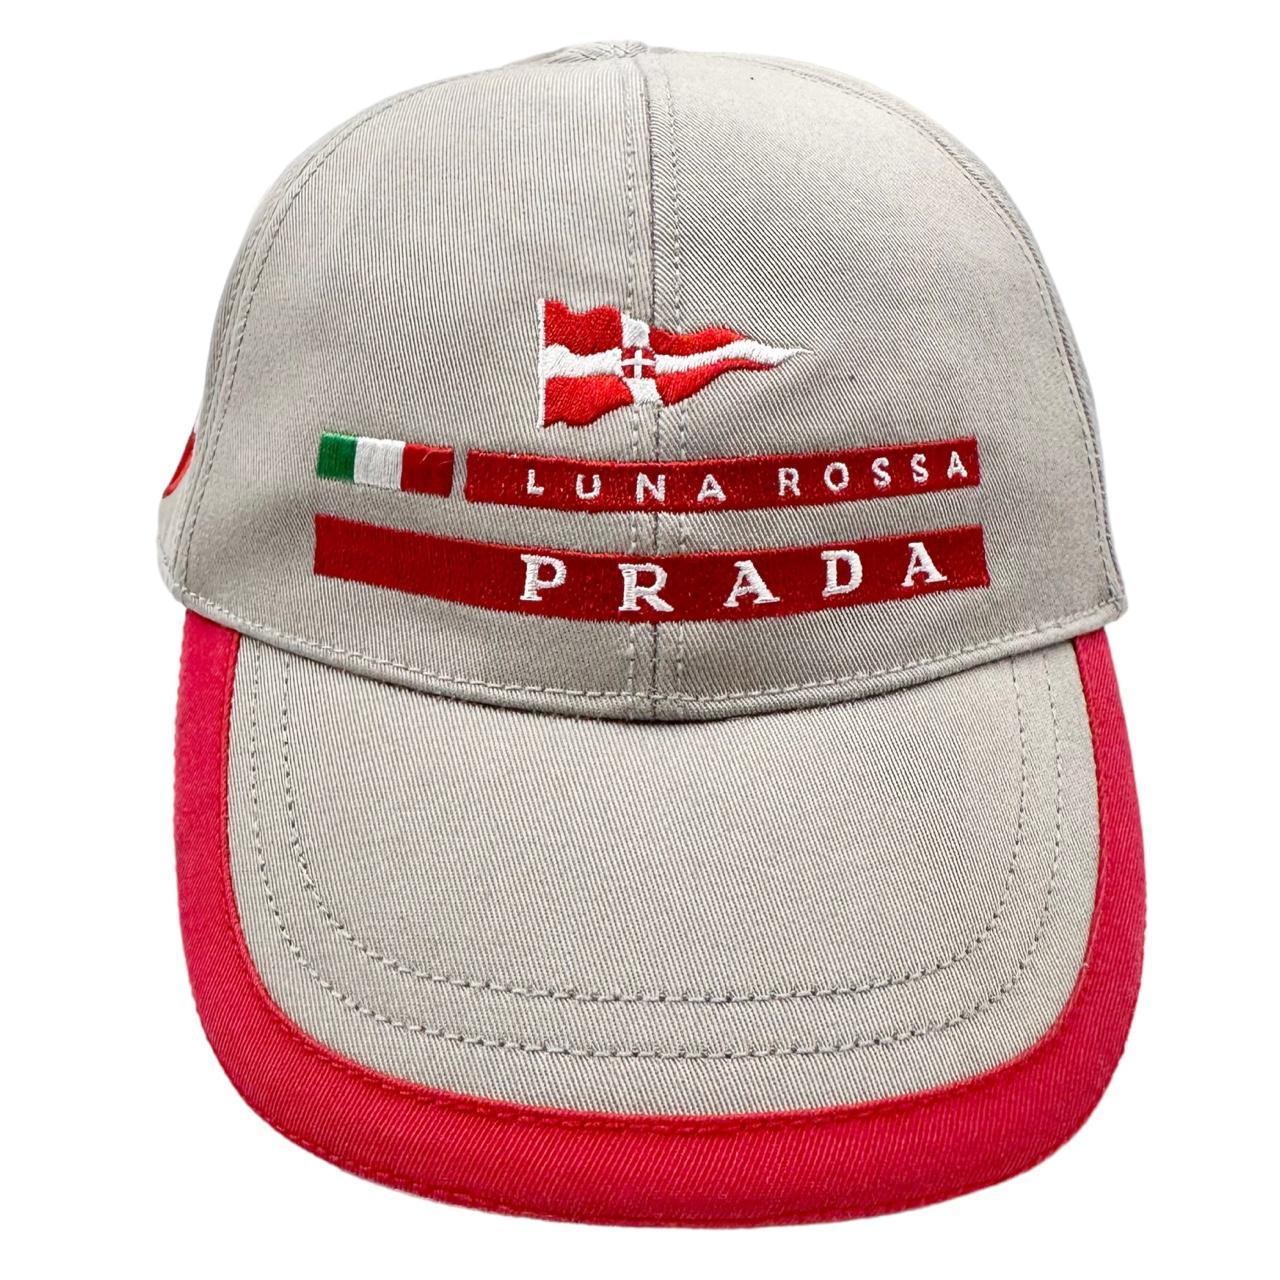 Vintage Prada Luna Rosa Hat - Known Source